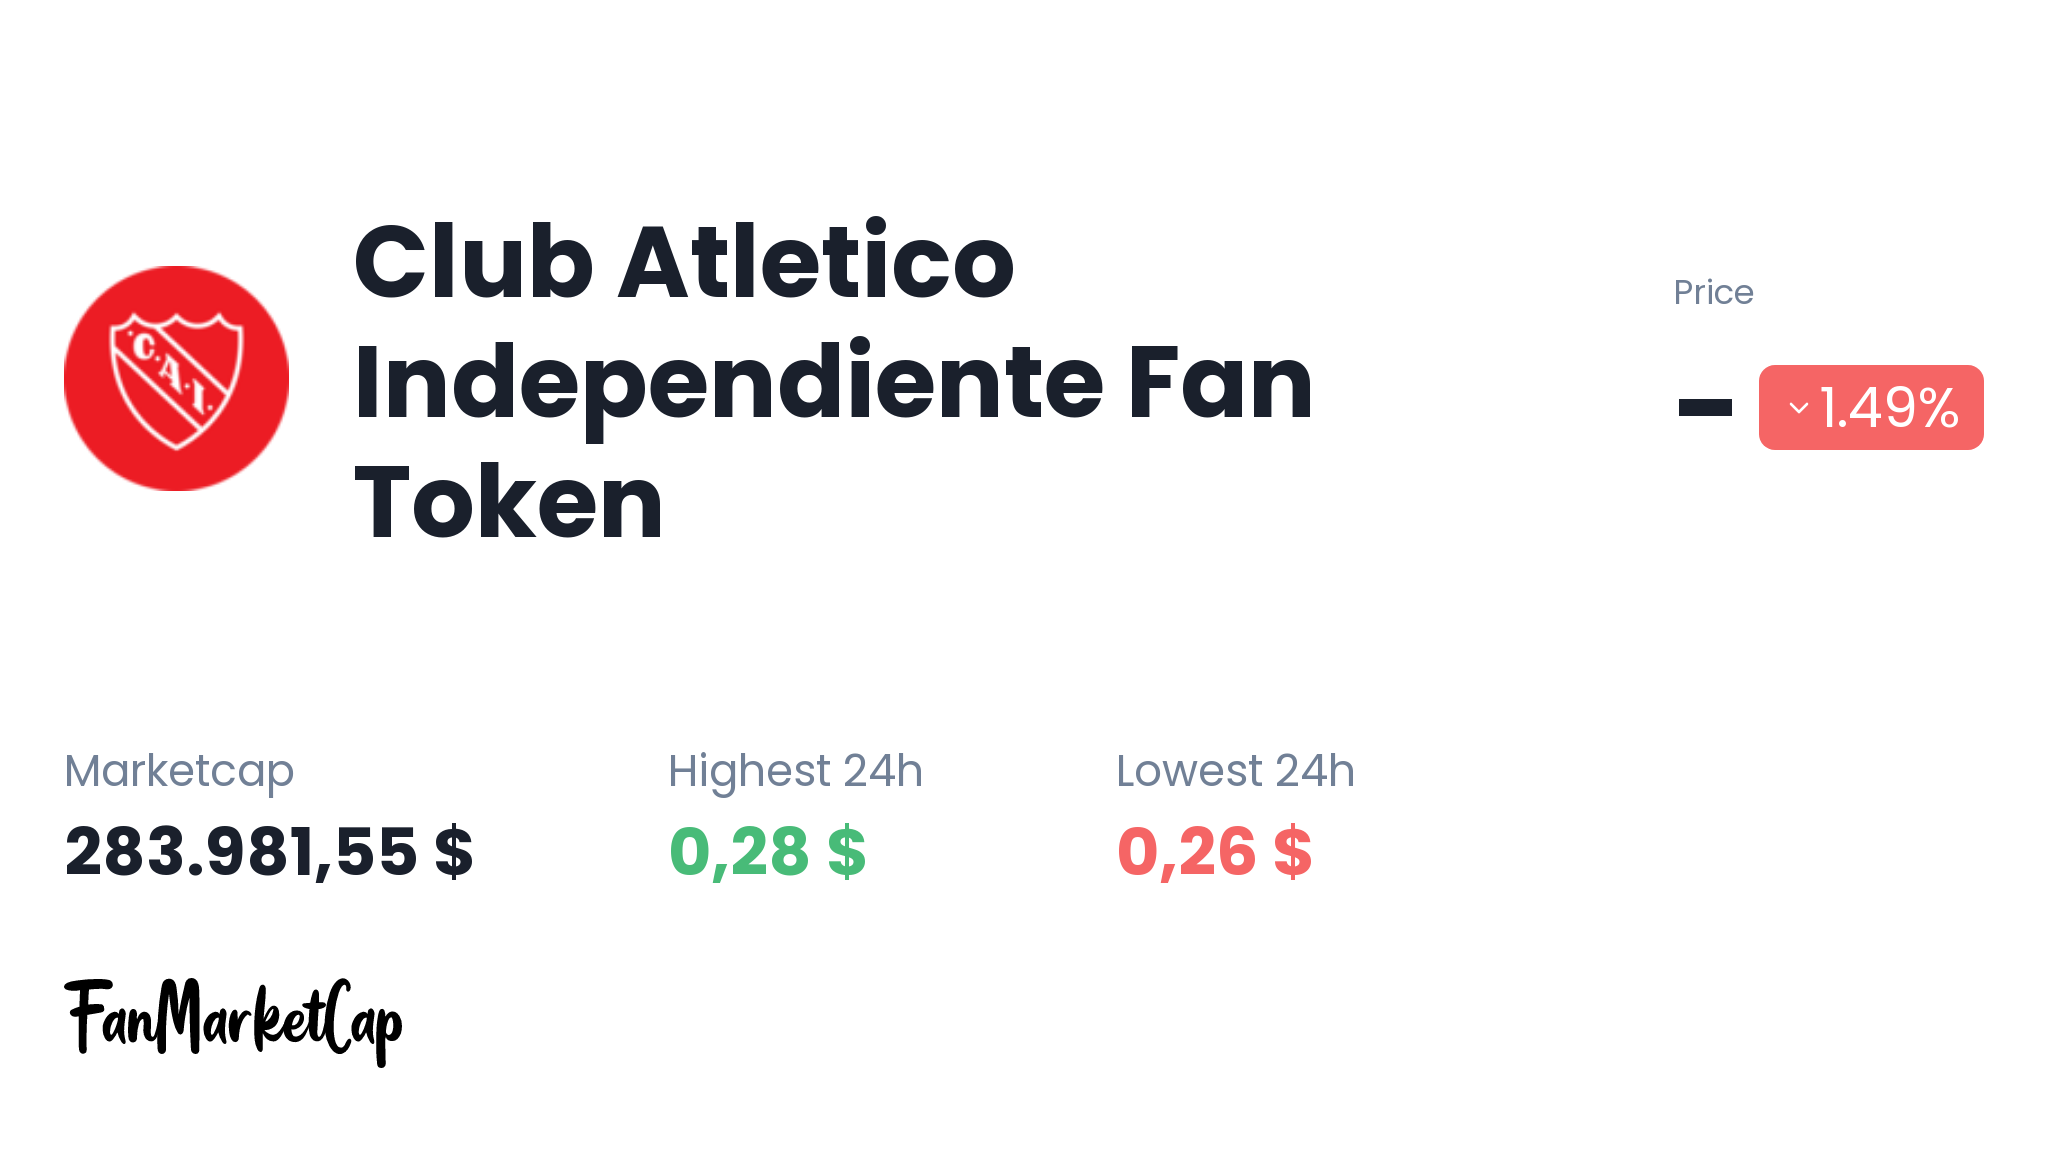 Club Atletico Independiente Fan Token (CAI) price, marketcap and info